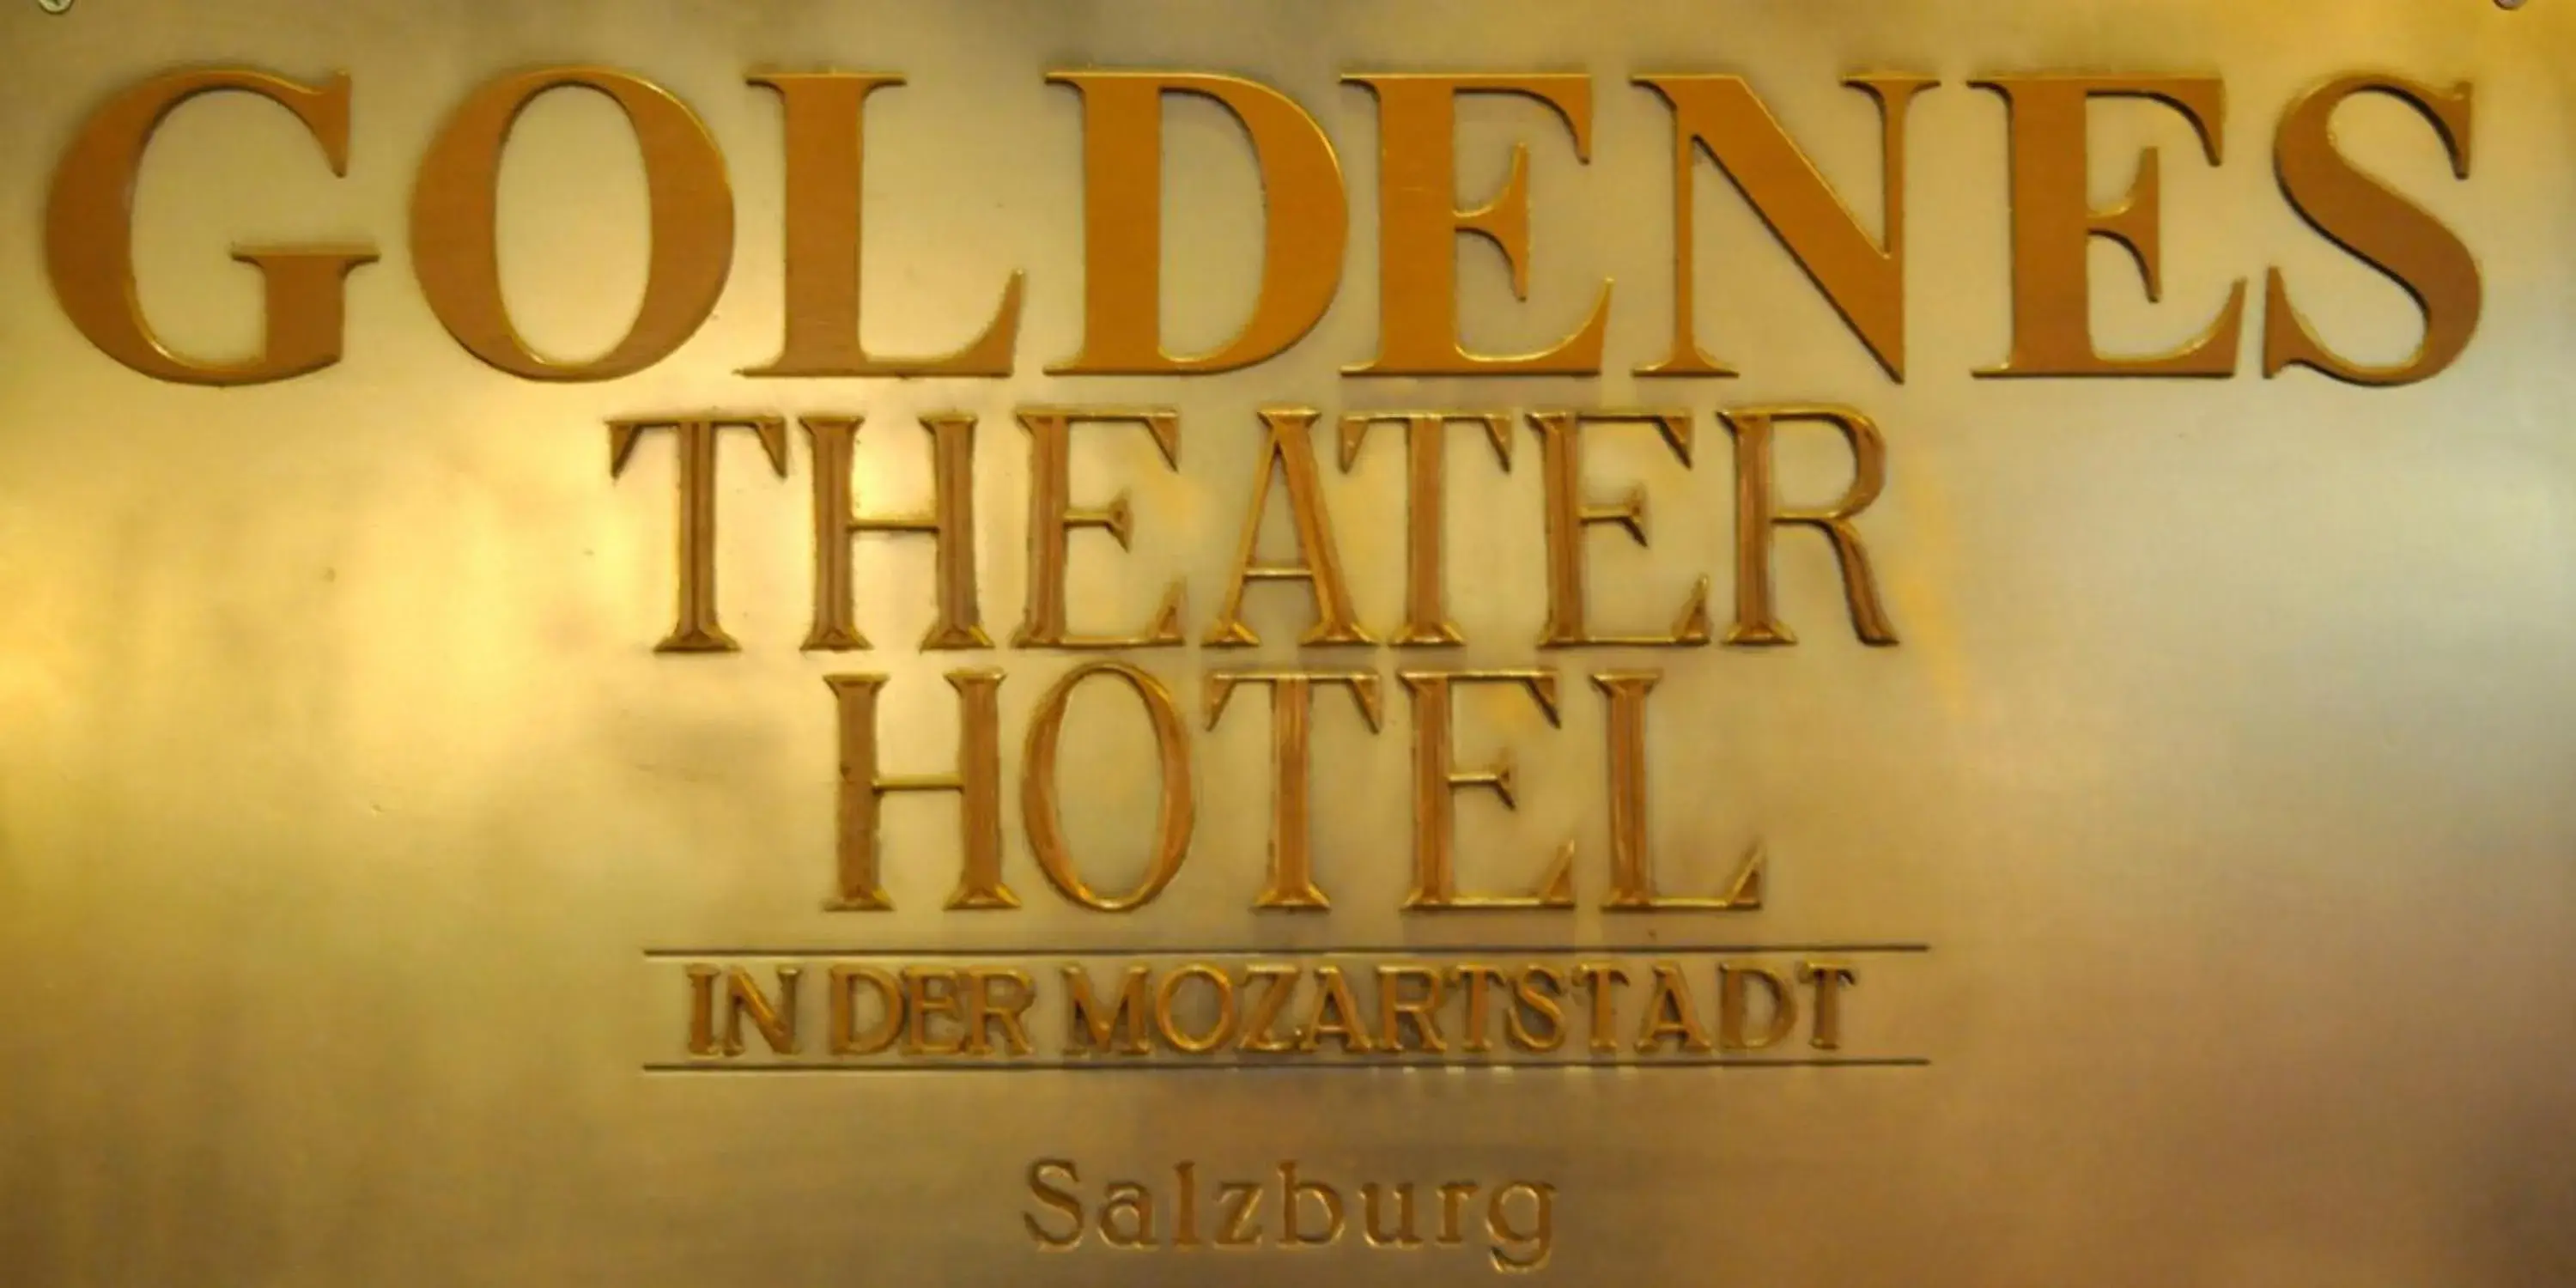 Property logo or sign, Property Logo/Sign in Goldenes Theater Hotel Salzburg